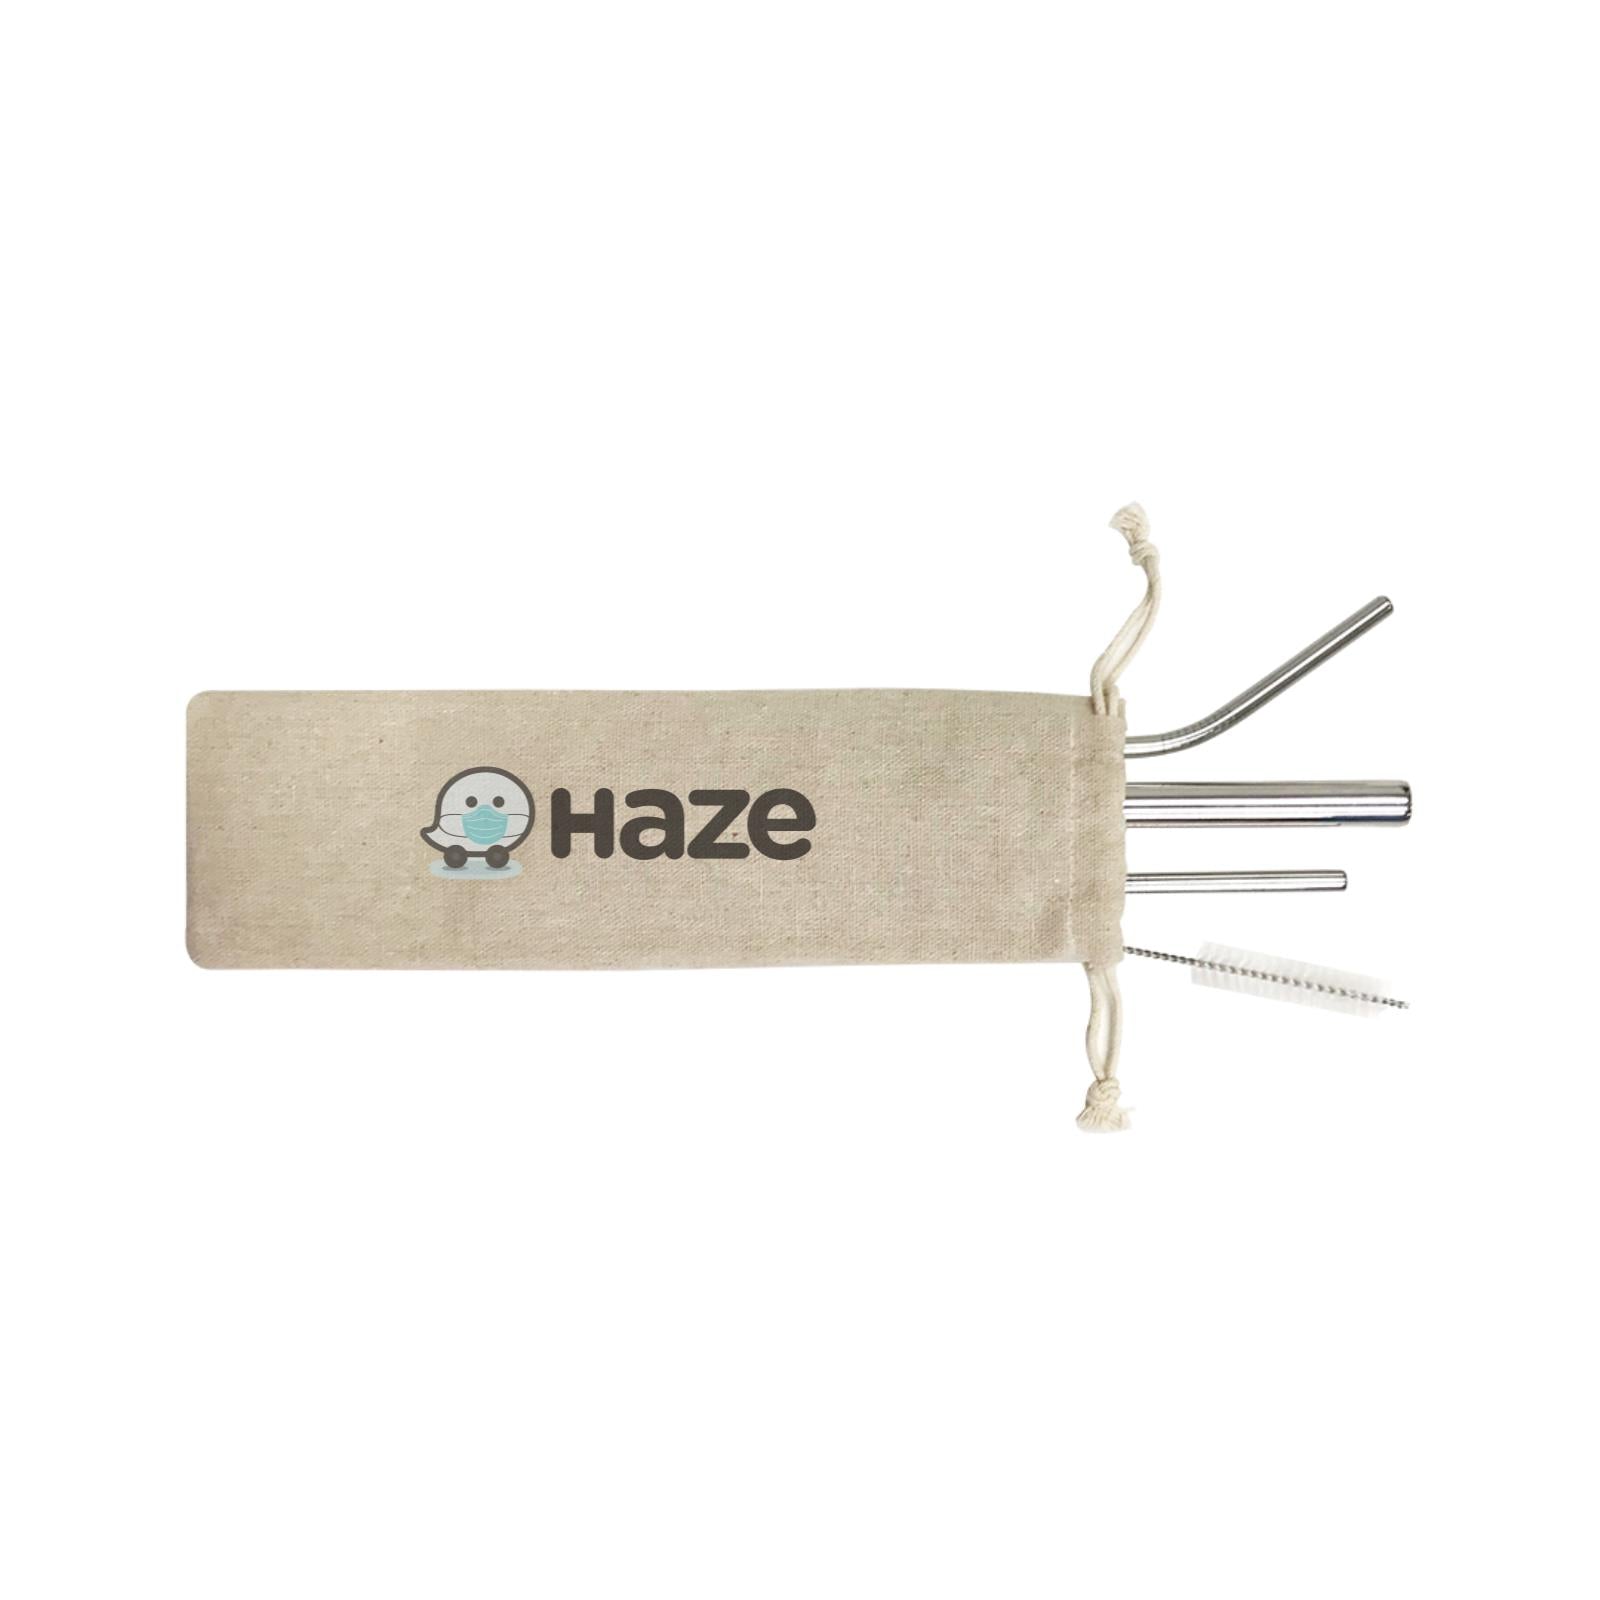 Slang Statement Haze 4-in-1 Stainless Steel Straw Set In a Satchel